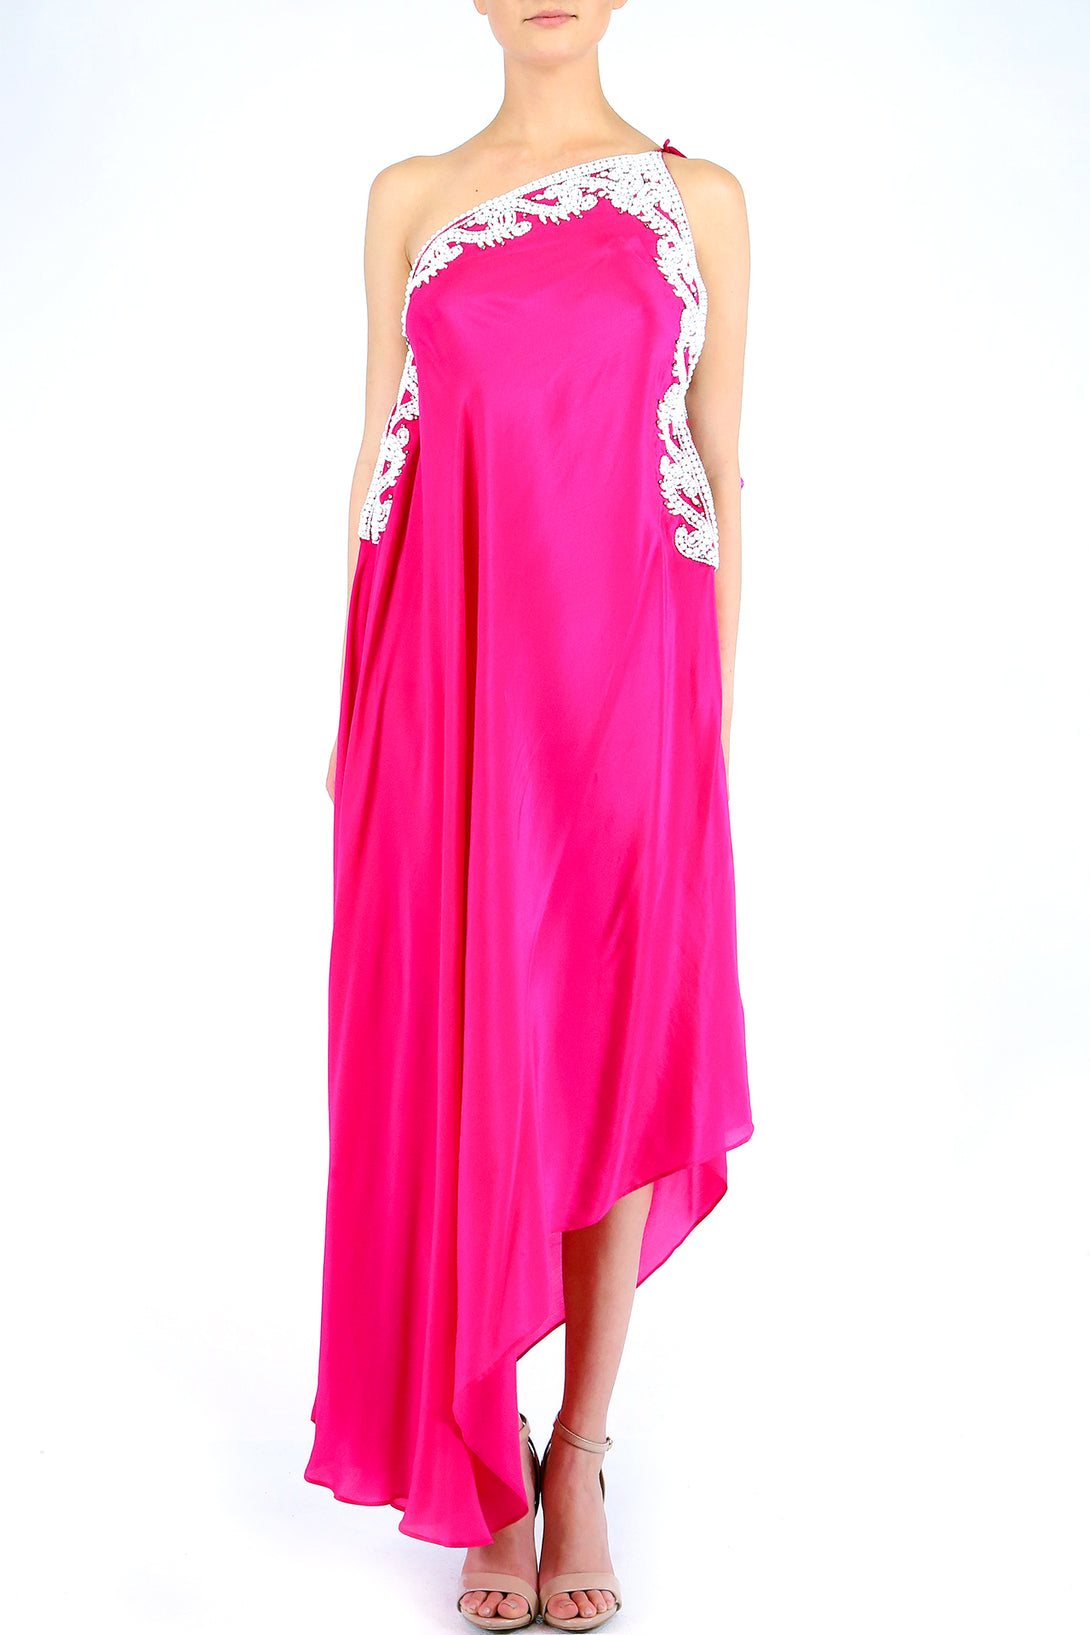  pink maxi dress women, long dresses for women, flowy maxi dress, infinity plus size dress,